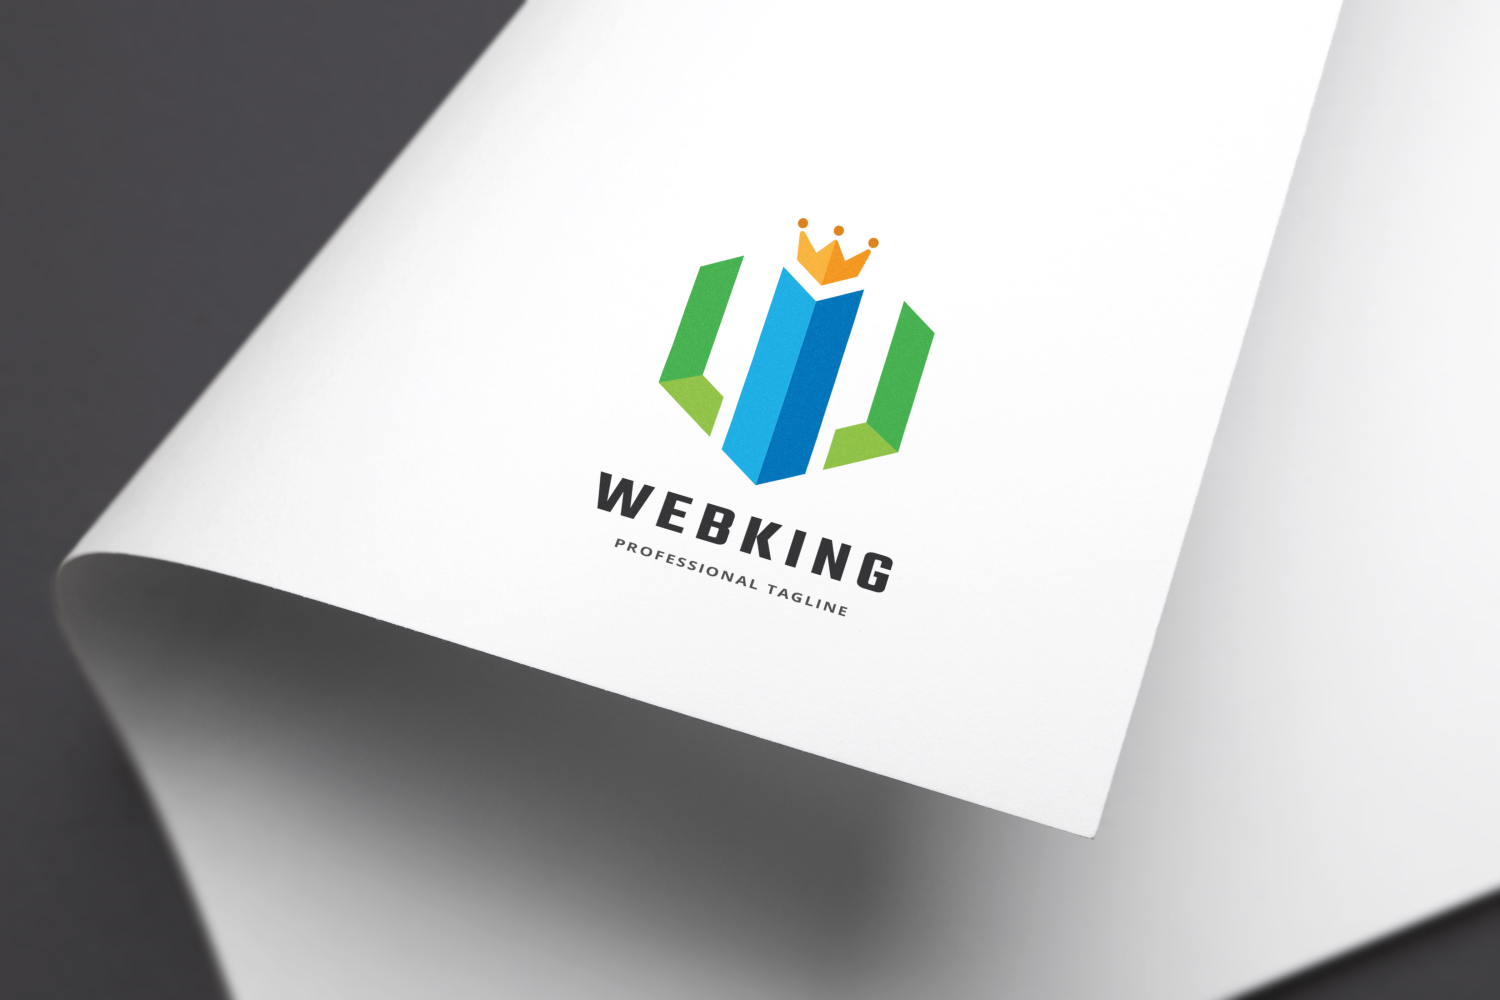 Web King Letter W Logo Template